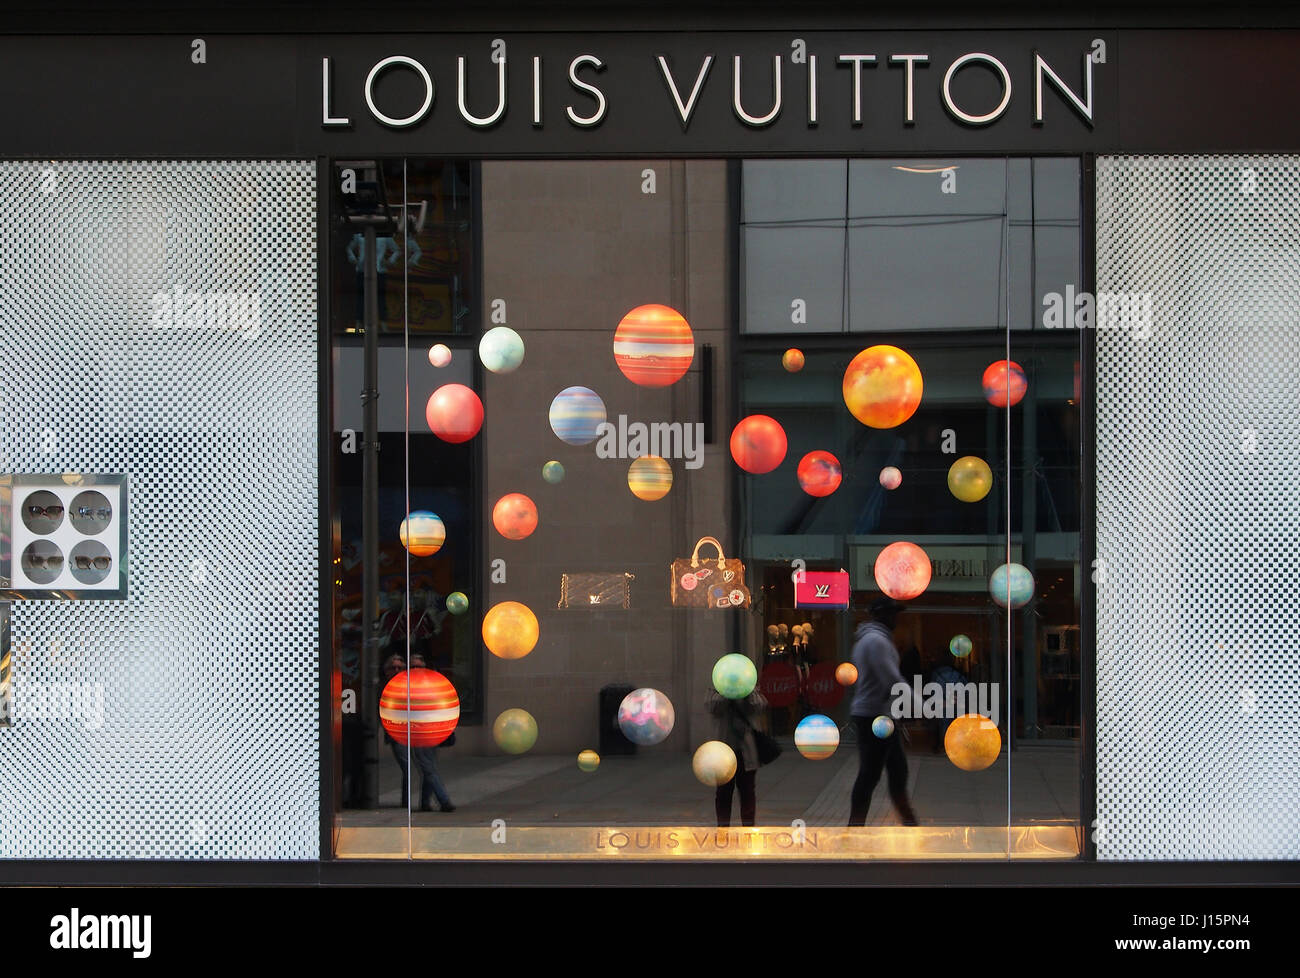 Louis vuitton coloured heart shape shop window display. Sloane